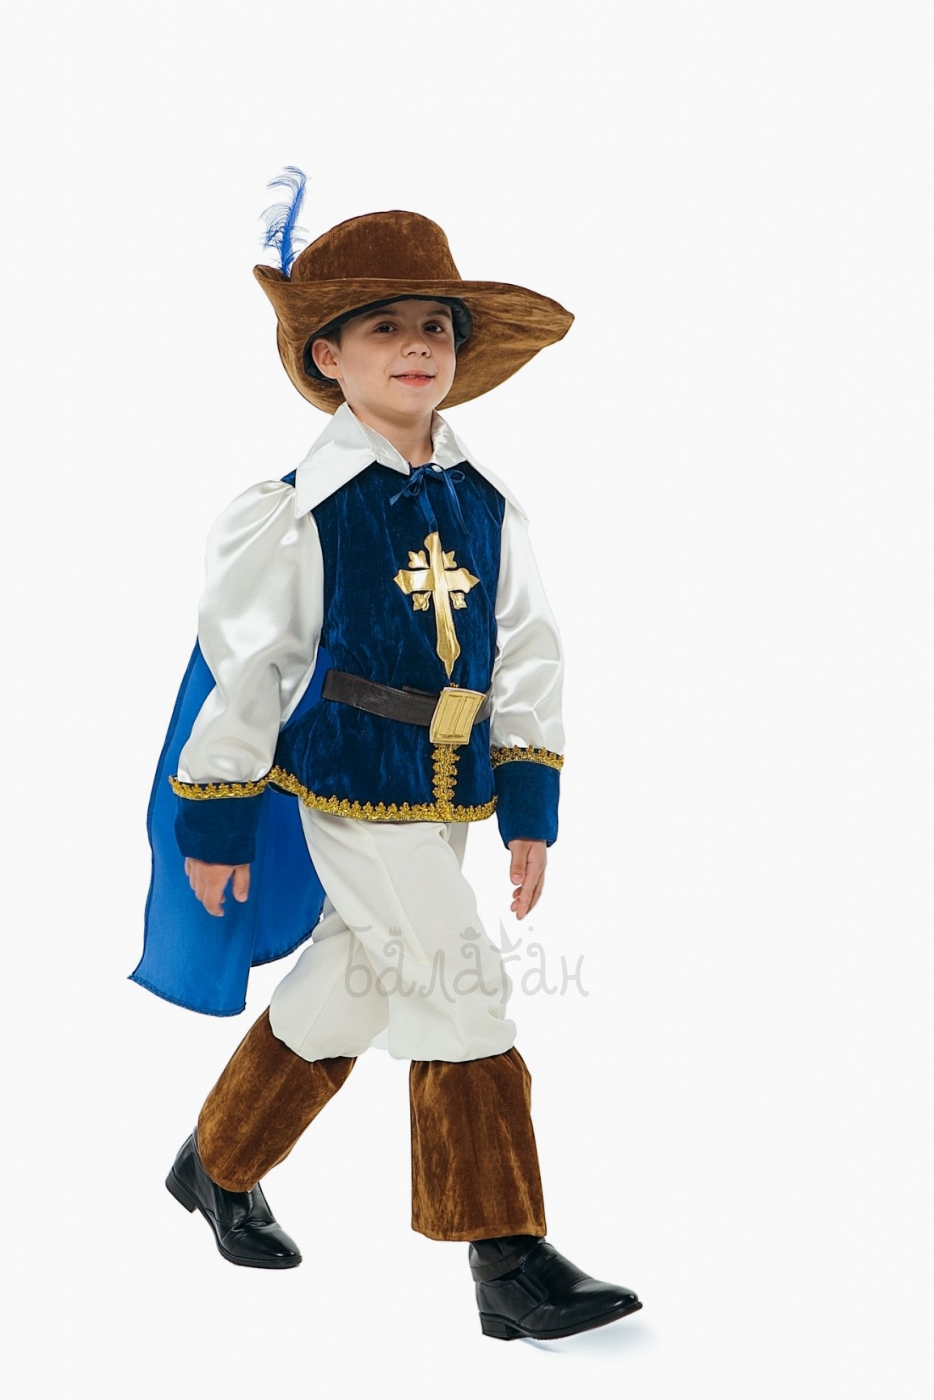 Musketeer costume